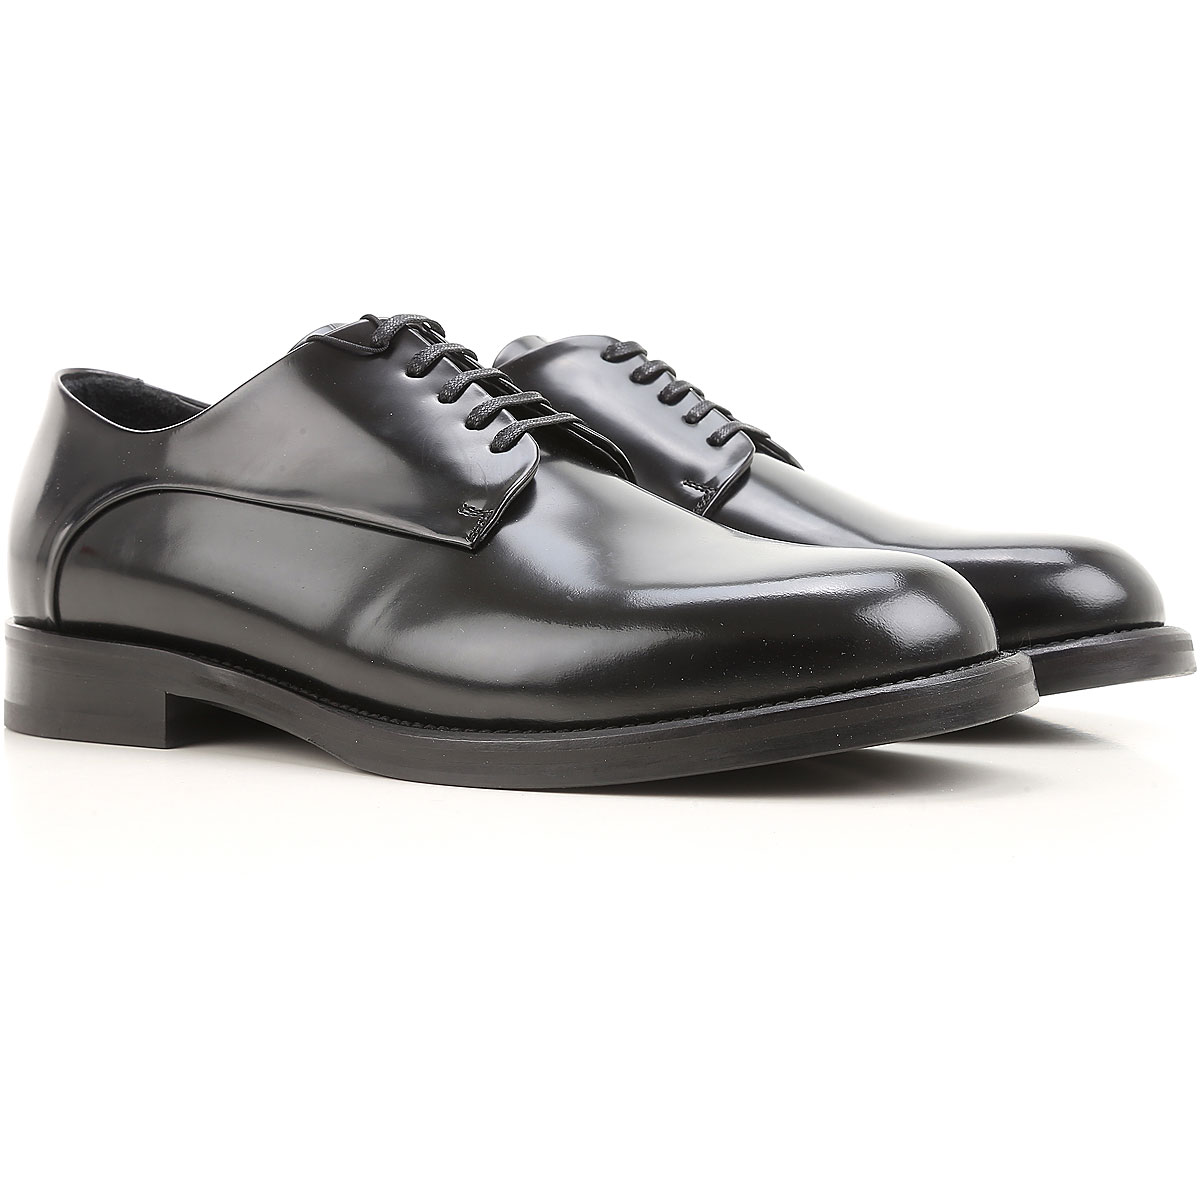 Mens Shoes Emporio Armani, Style code: 545010-7a606-00020